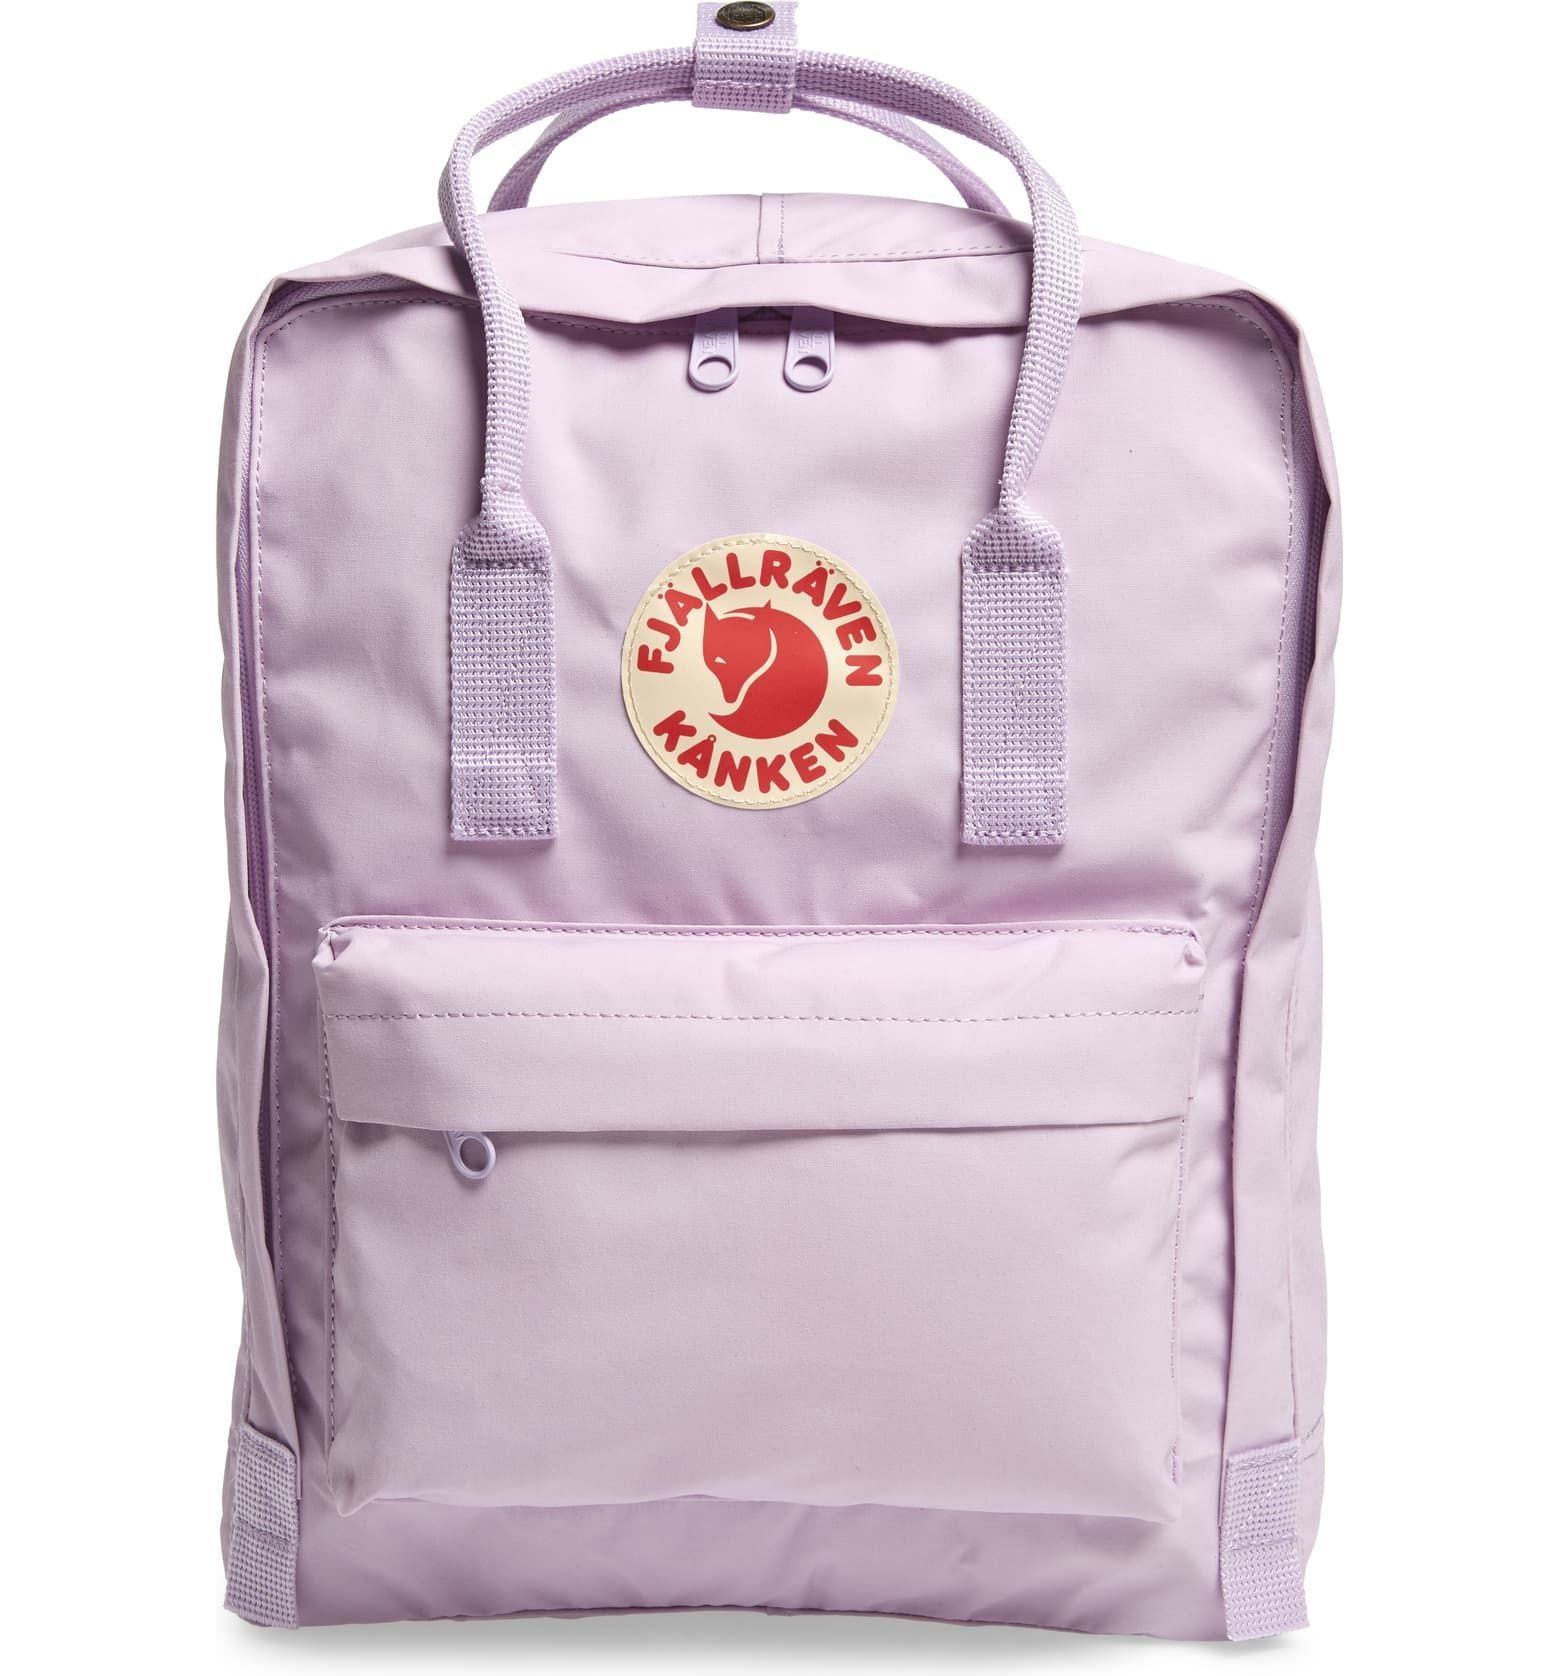 25 of the Best Backpack Brands 2020 — Shop Cute Backpacks